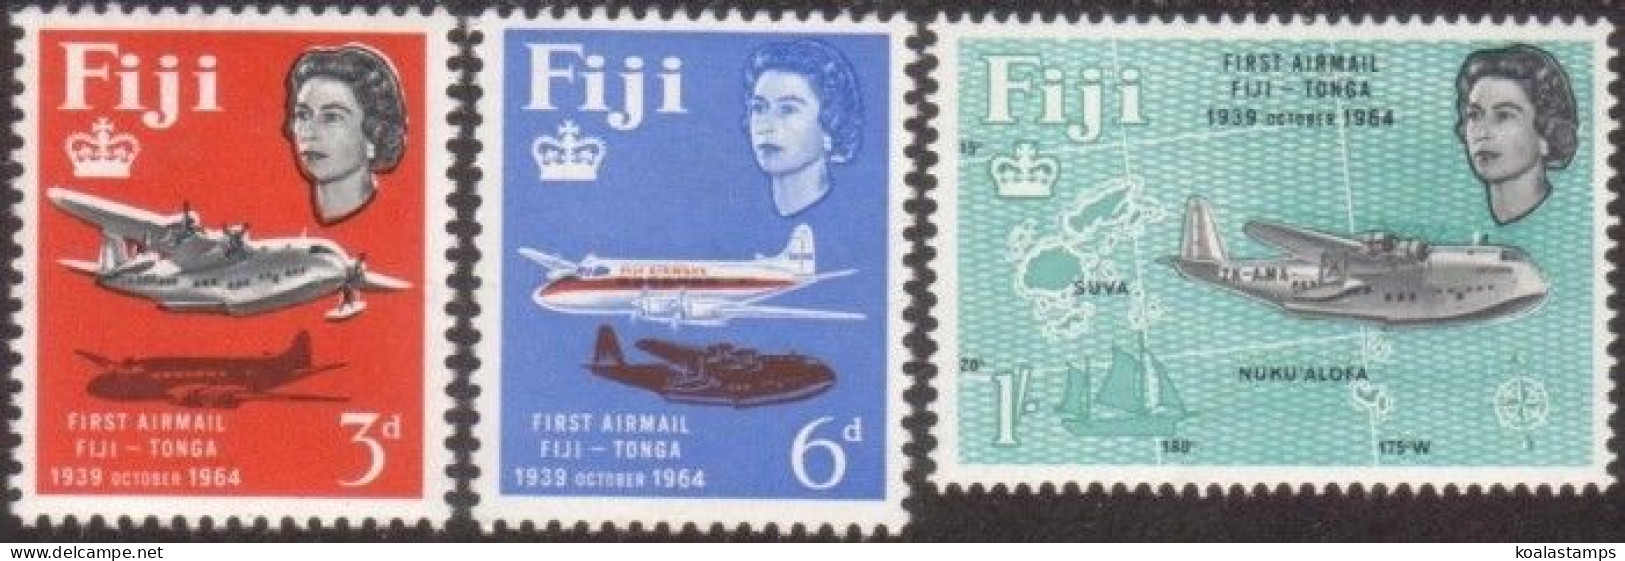 Fiji 1964 SG338-340 Fiji-Tonga Airmail Service QEII Set MNH - Fidji (1970-...)